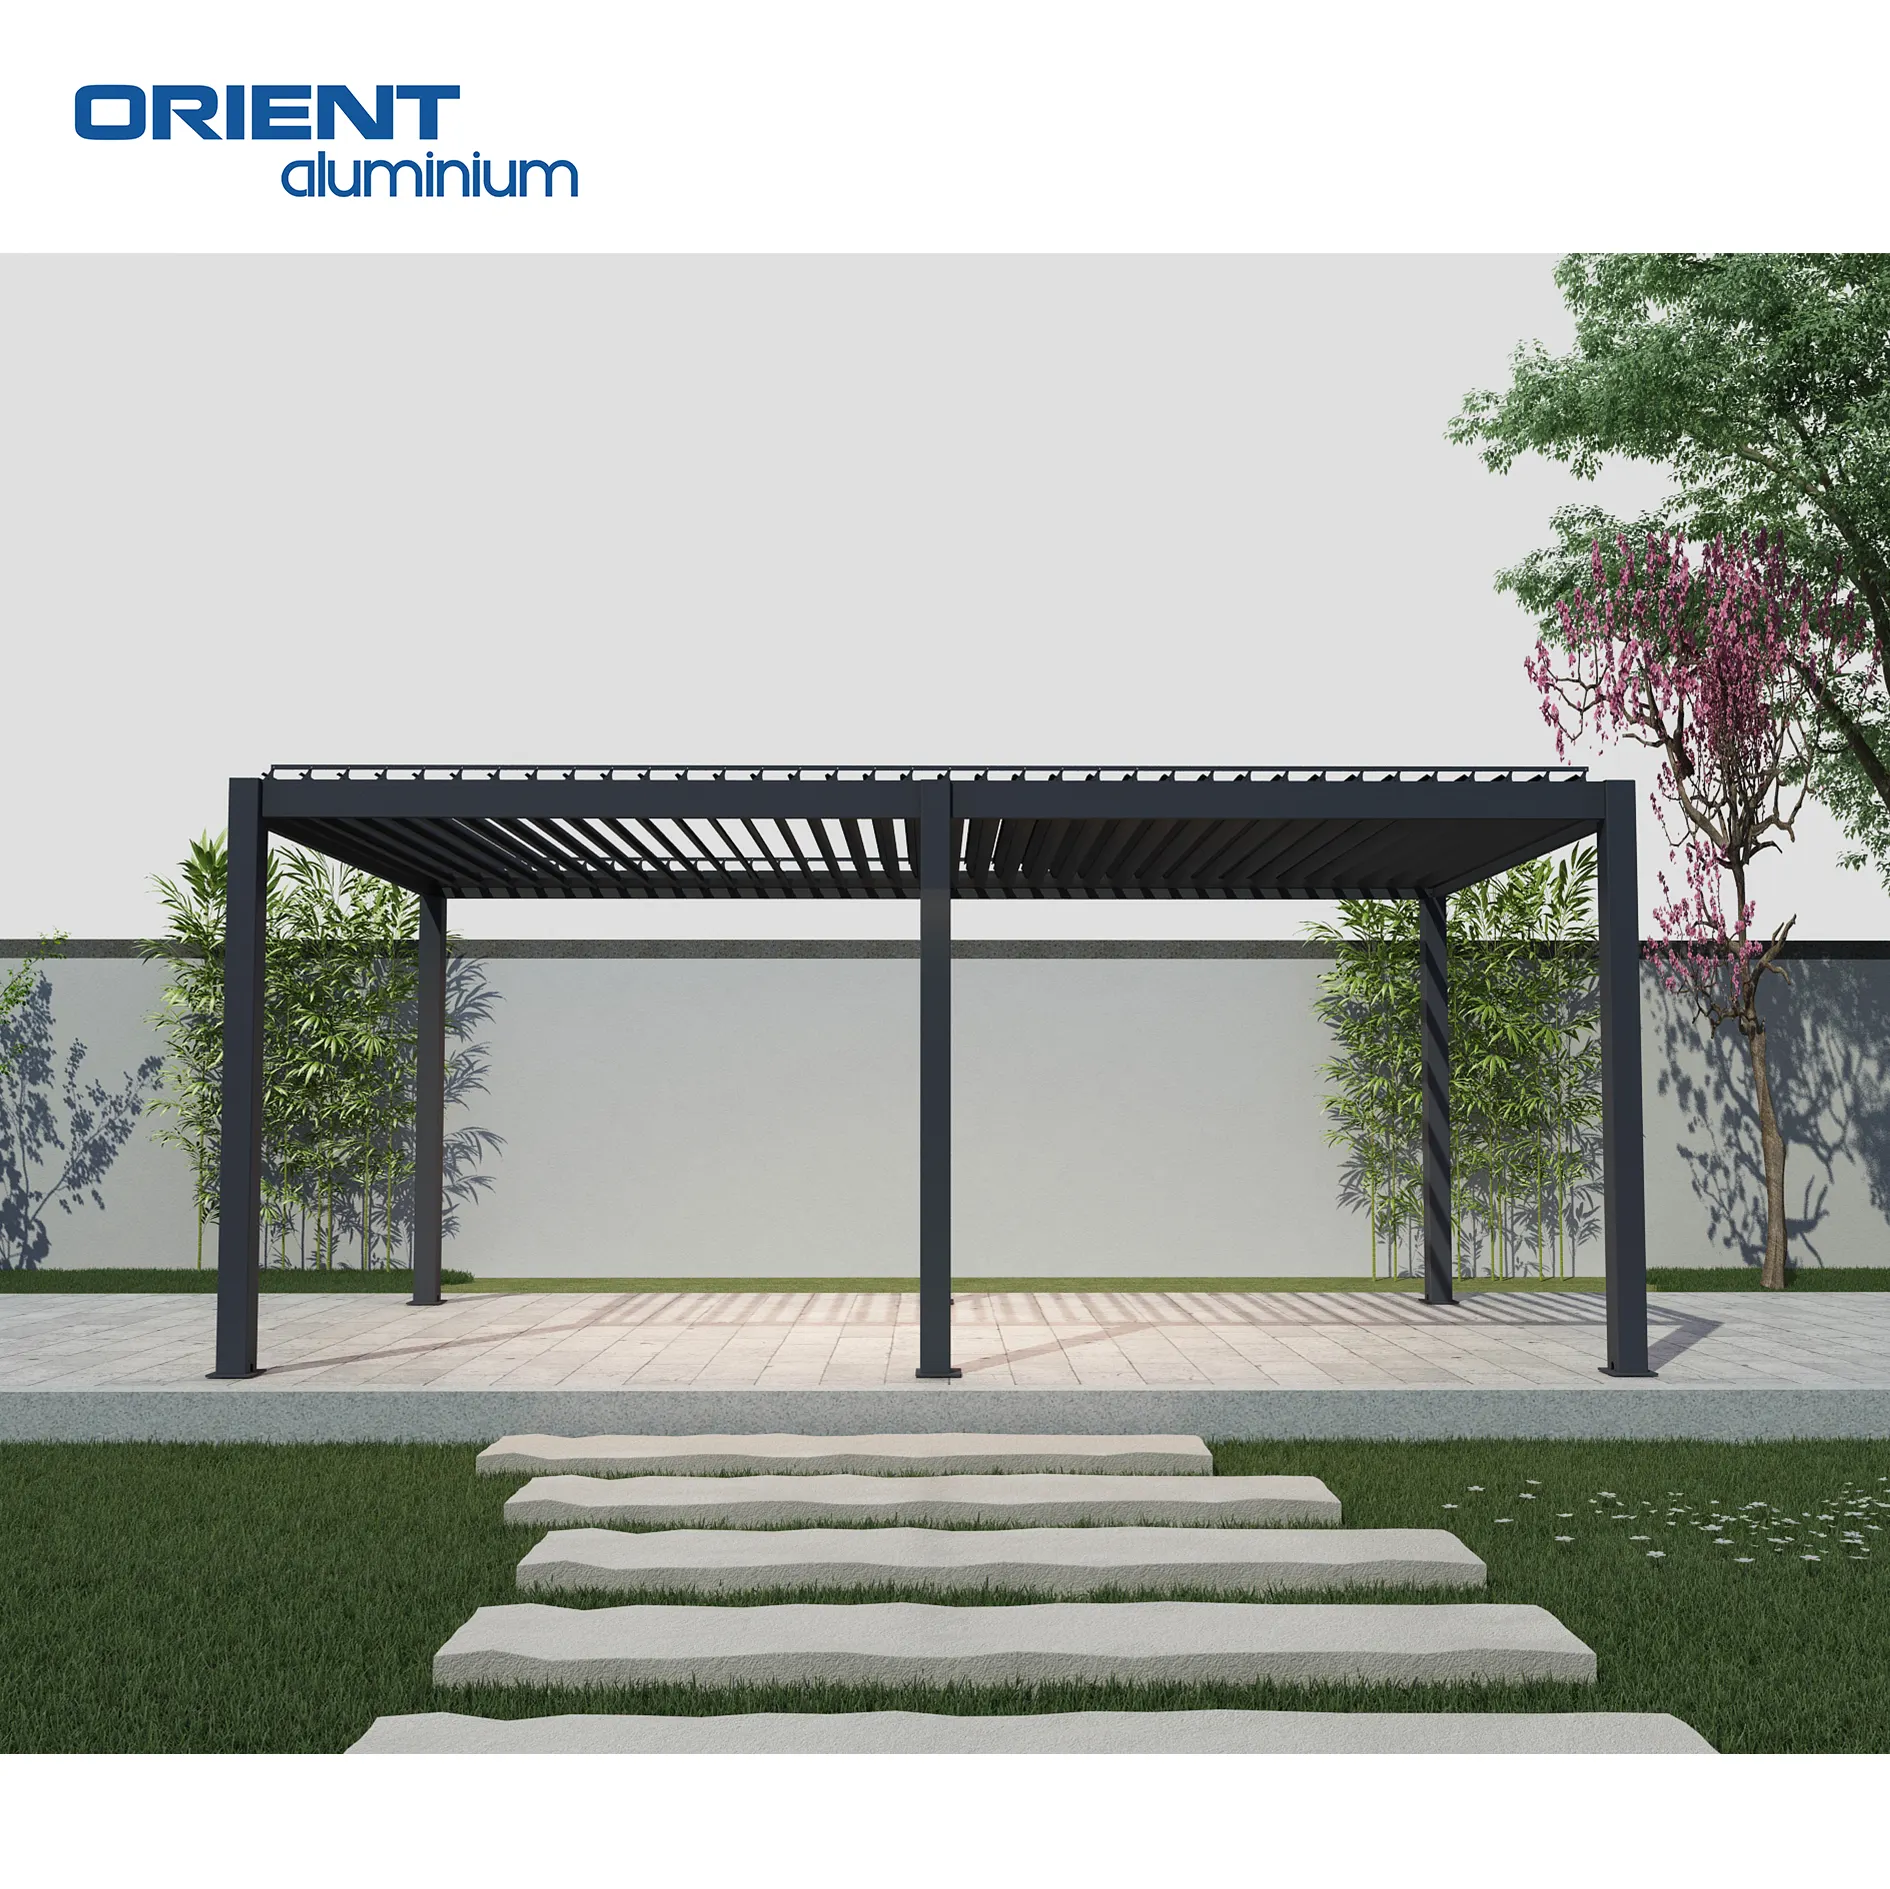 Im Freien beliebt China benutzerdefiniert luxuriös modern im Freien Pergola Aluminium wasserdichtes Lamellendach Metall Garten Pergola